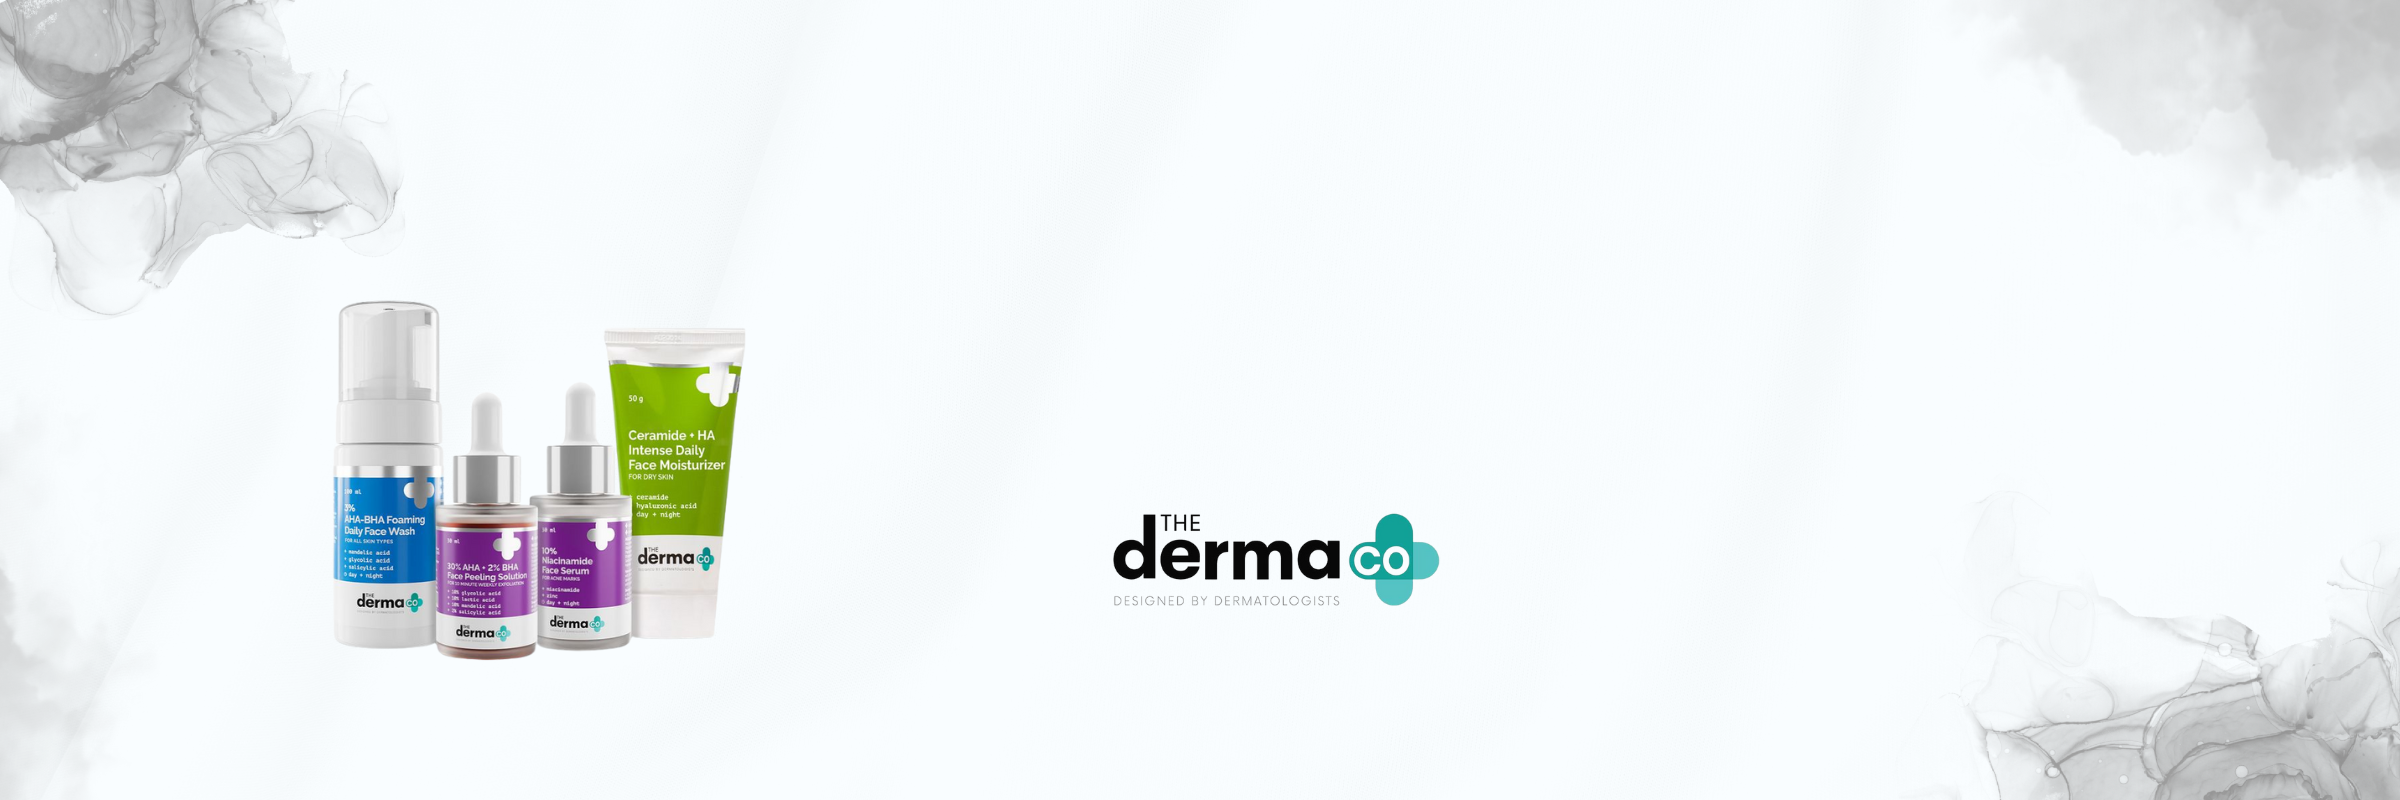 the derma co no more acne marks regimen nepal banner